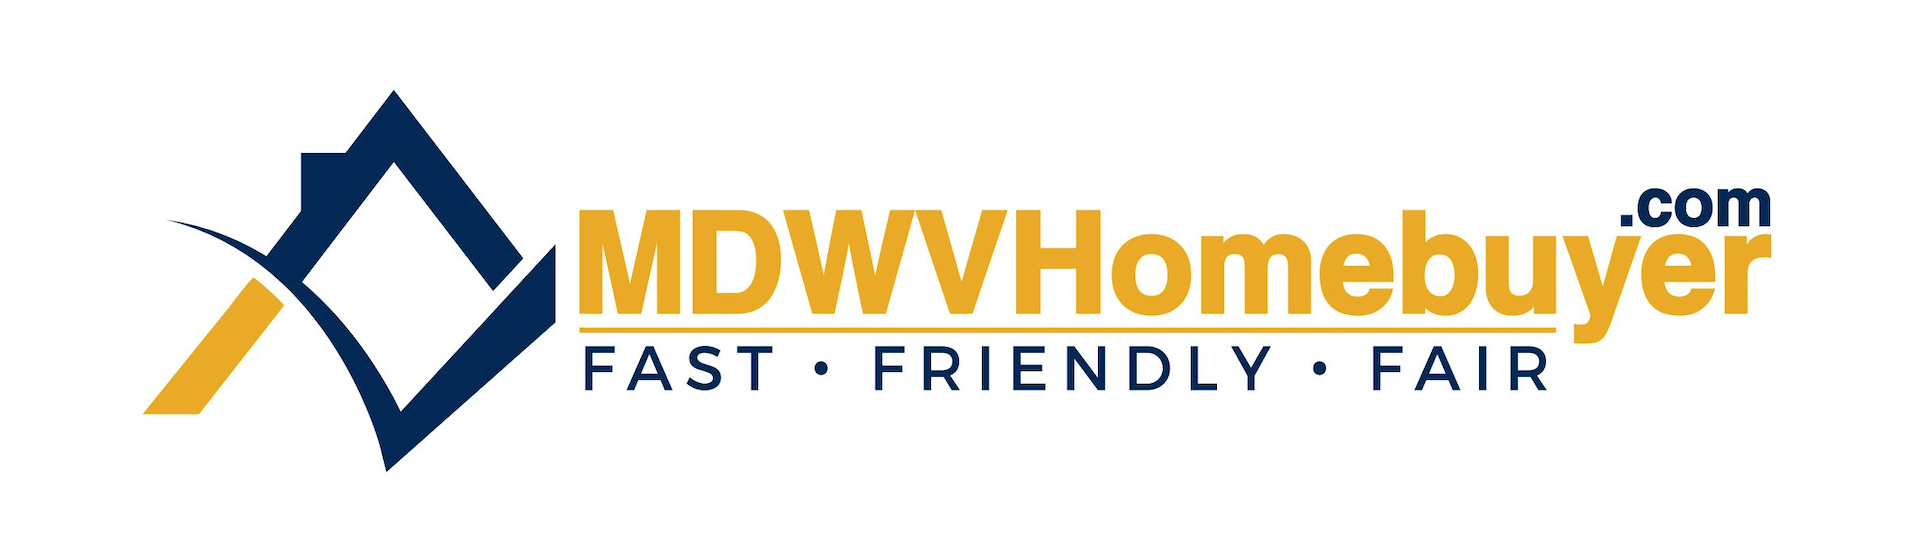 MDWVHomebuyer.com logo